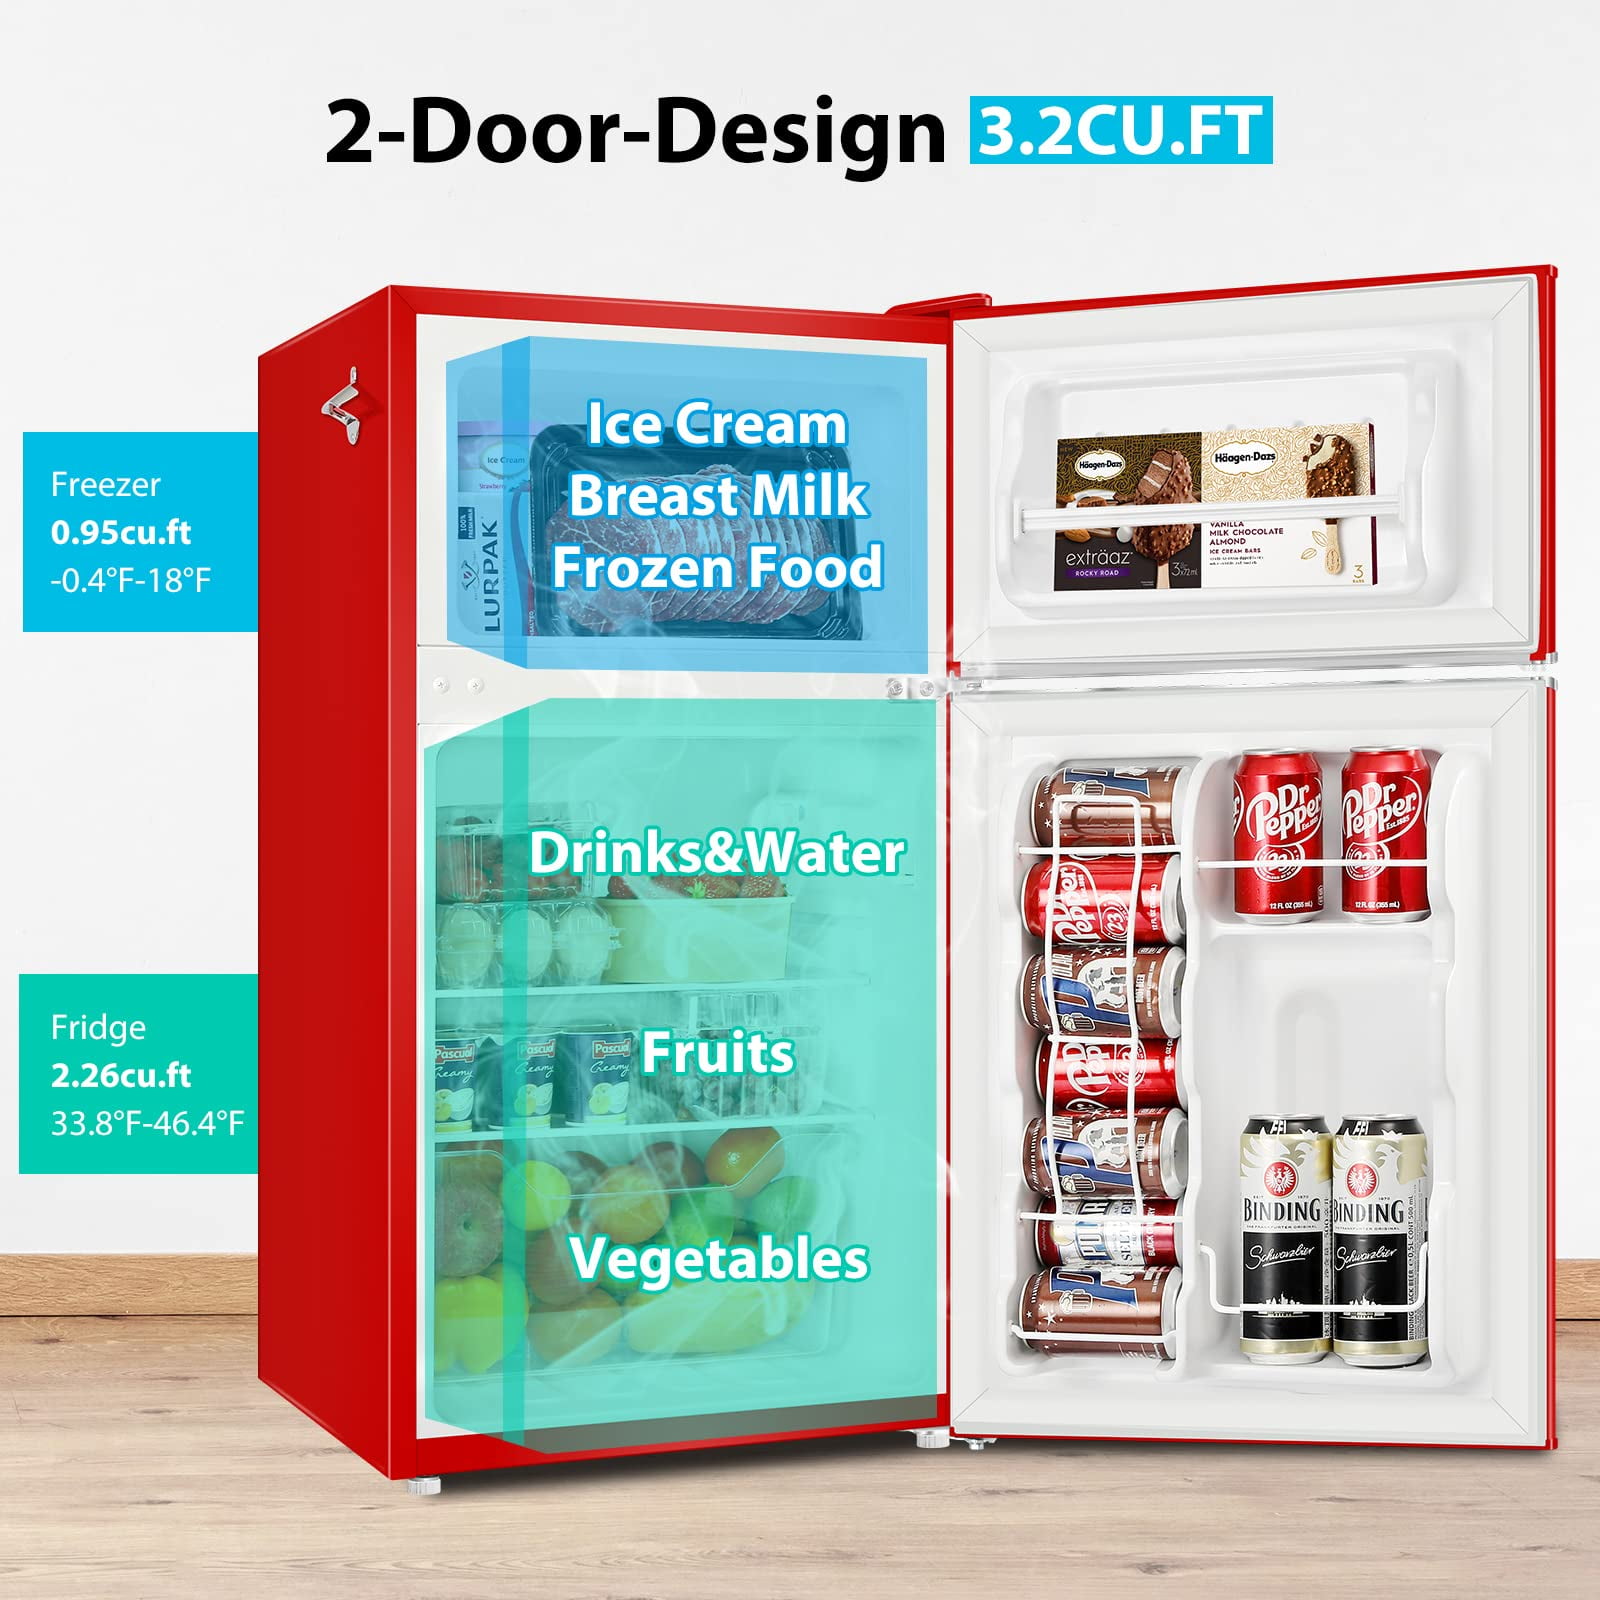 BANGSON Mini Fridge with Freezer, 2 Door Small Refrigerator with Freezer,  Mini Freezer Fridge Combo, 3.2 CU.FT, For Home, Office, Dorm, Garage or RV